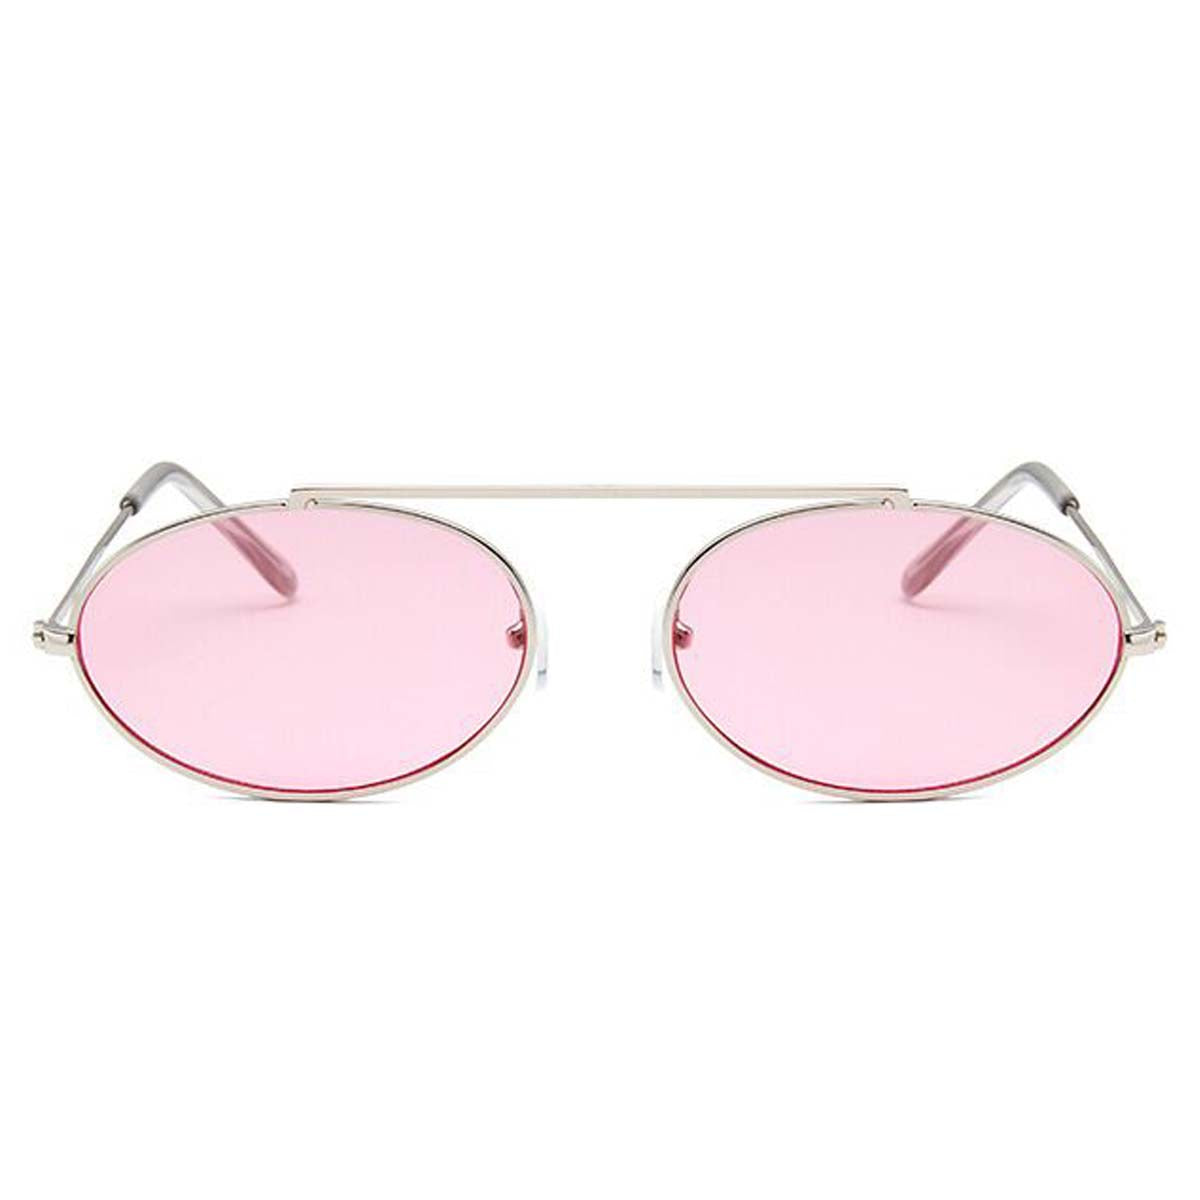 Oval pink aviators shades